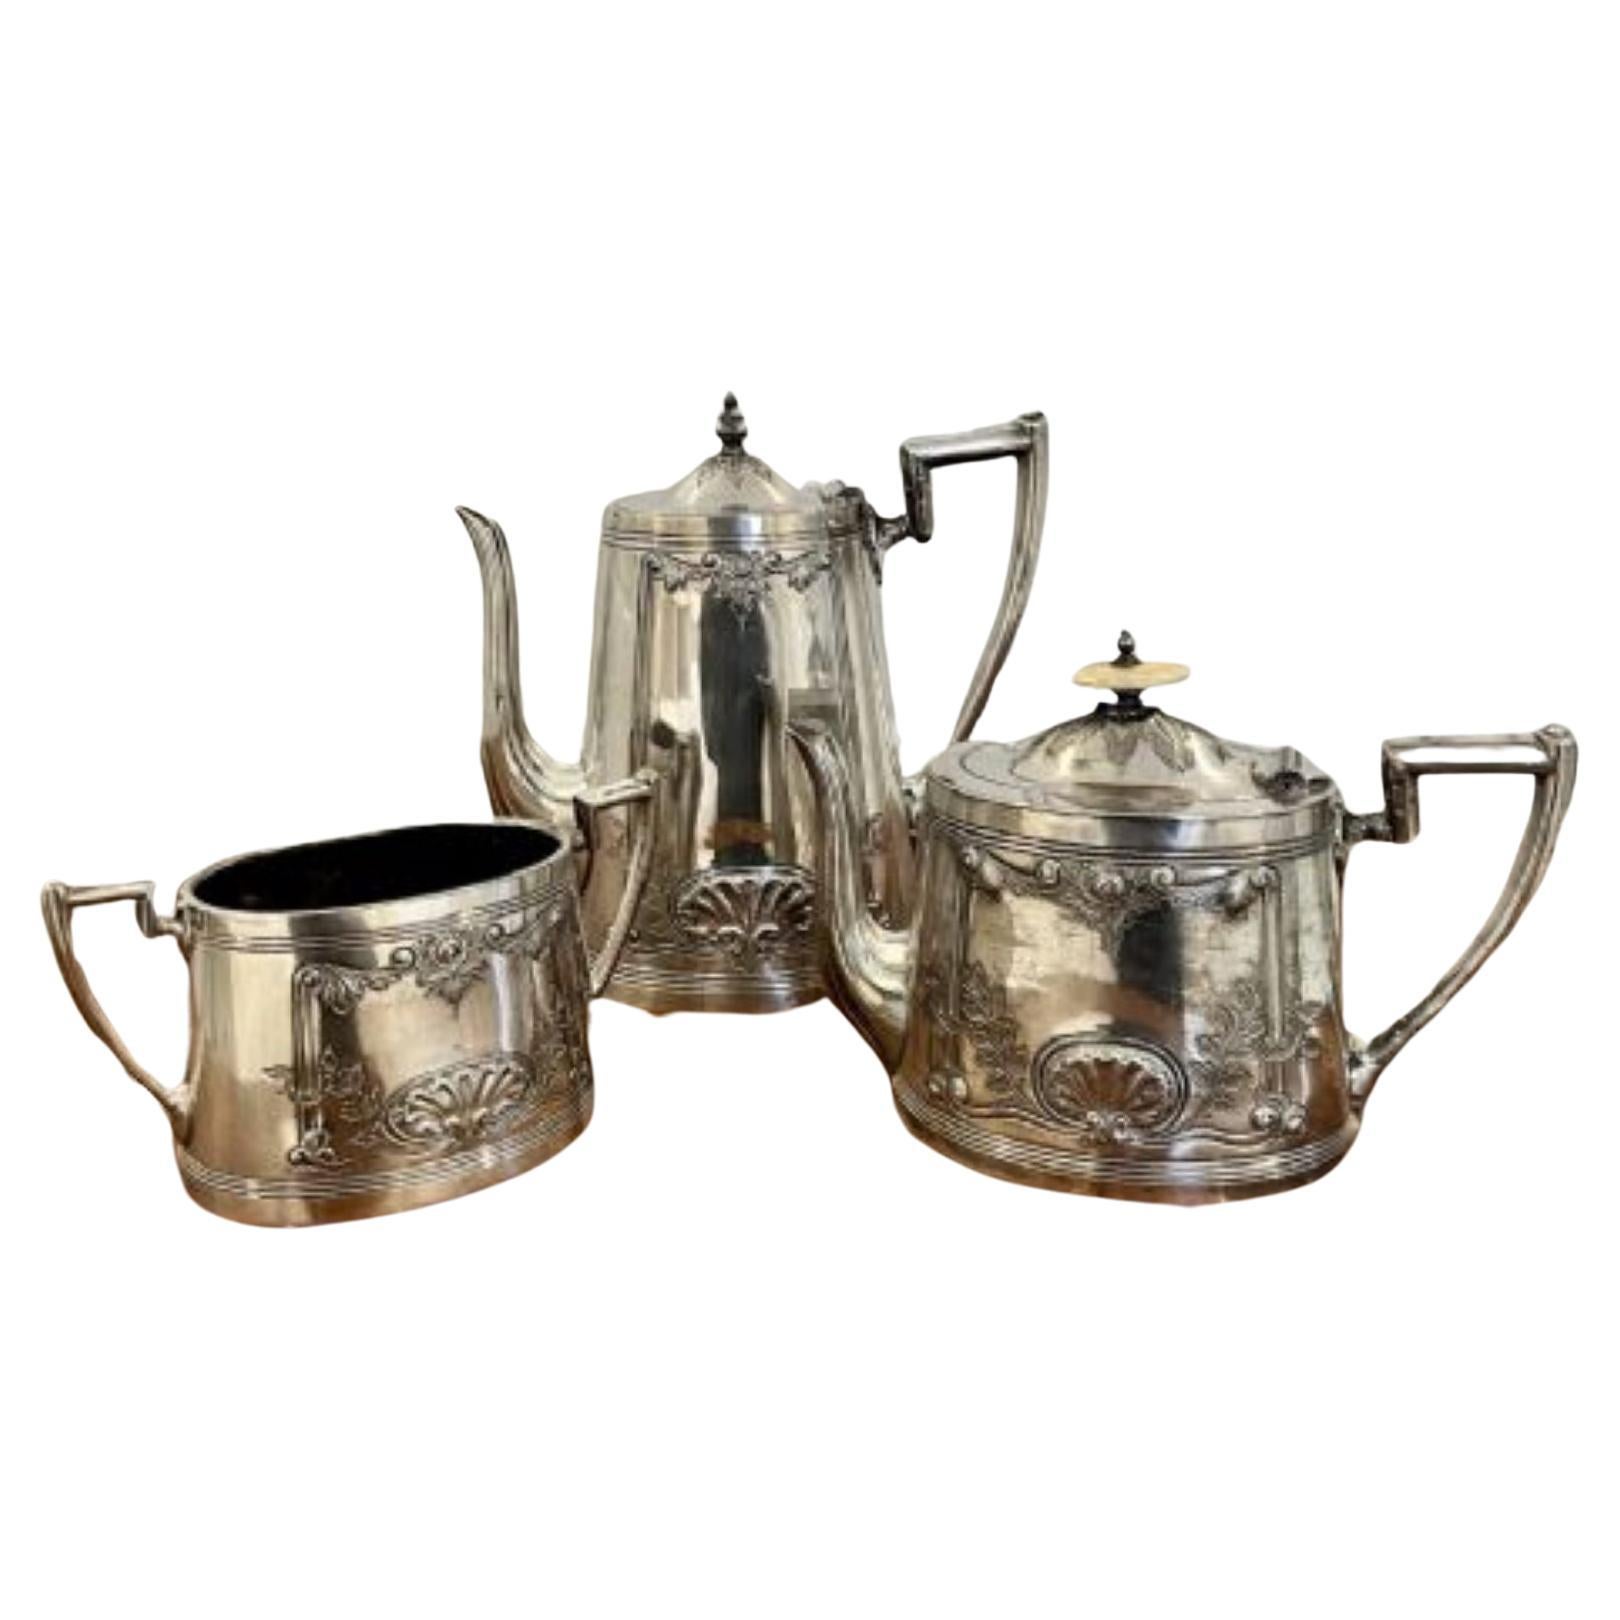 Antique Edwardian ornate silver plated three piece tea set